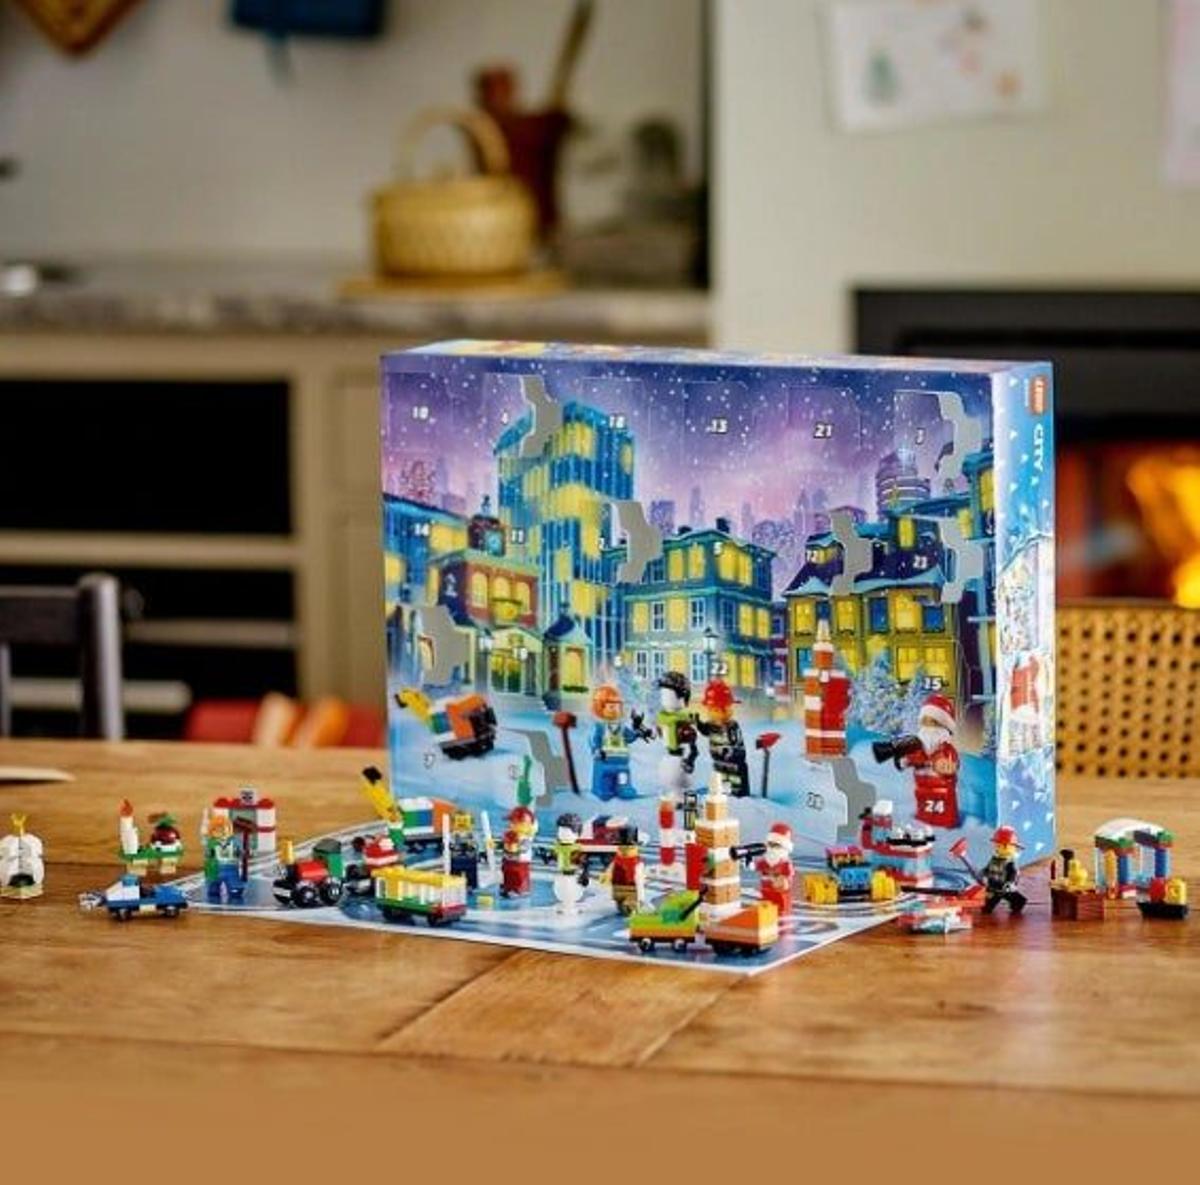 Calendario de adviento de Lego (Precio: 19,99 euros)